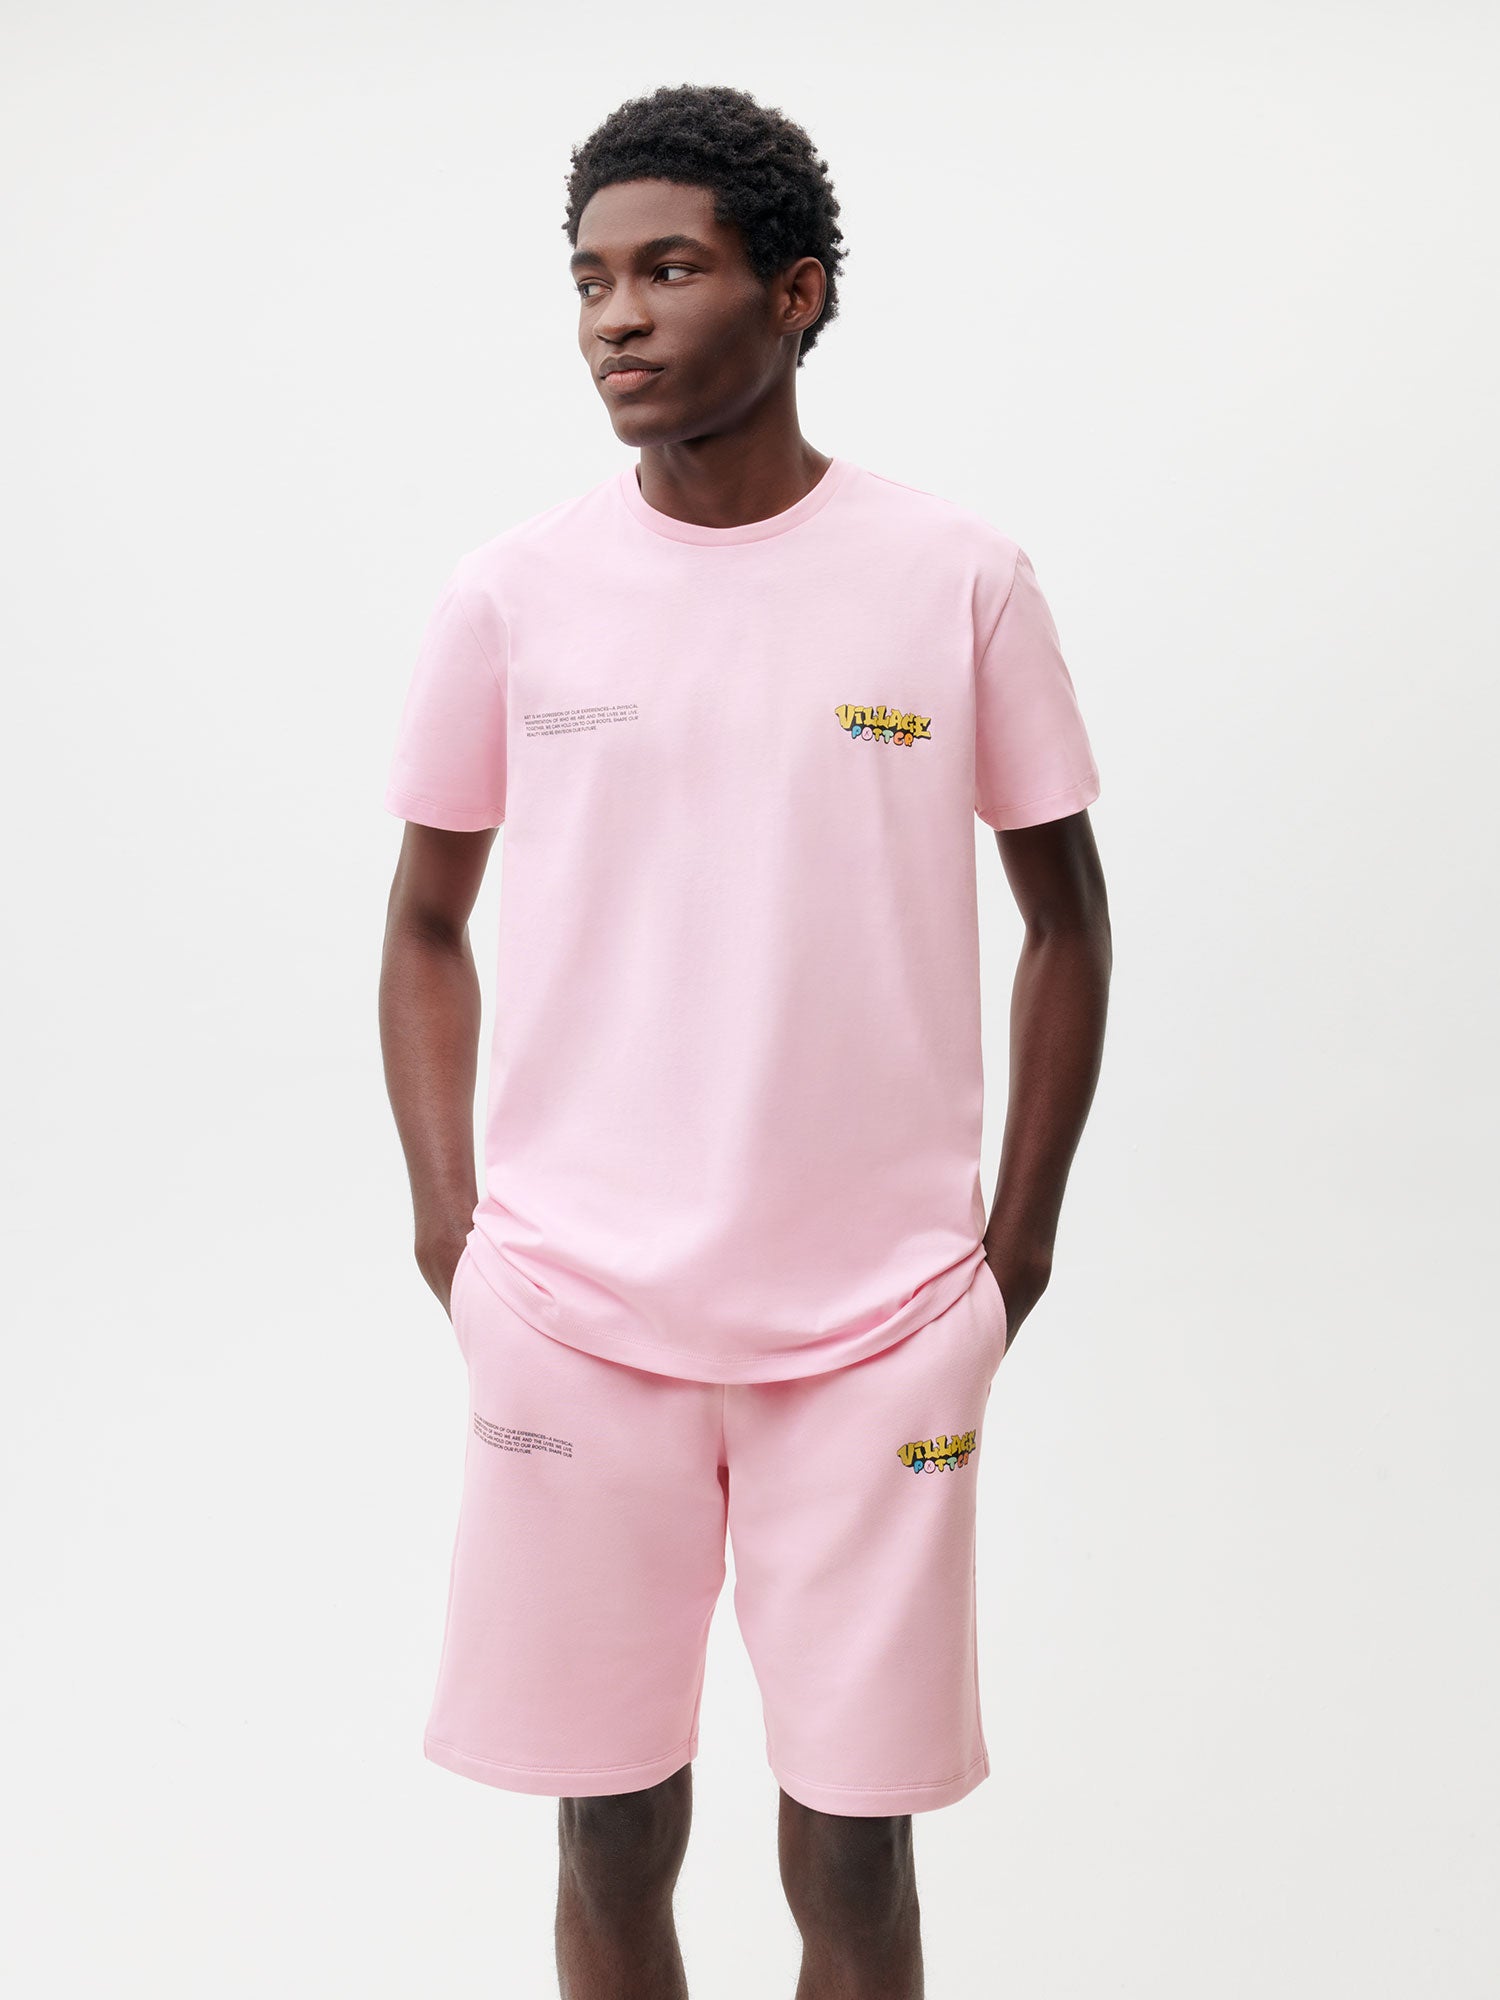 Pangaia-Roberto-Lugo-T-Shirt-Alfarero-Graphic-Funghi-Pink-Male-1